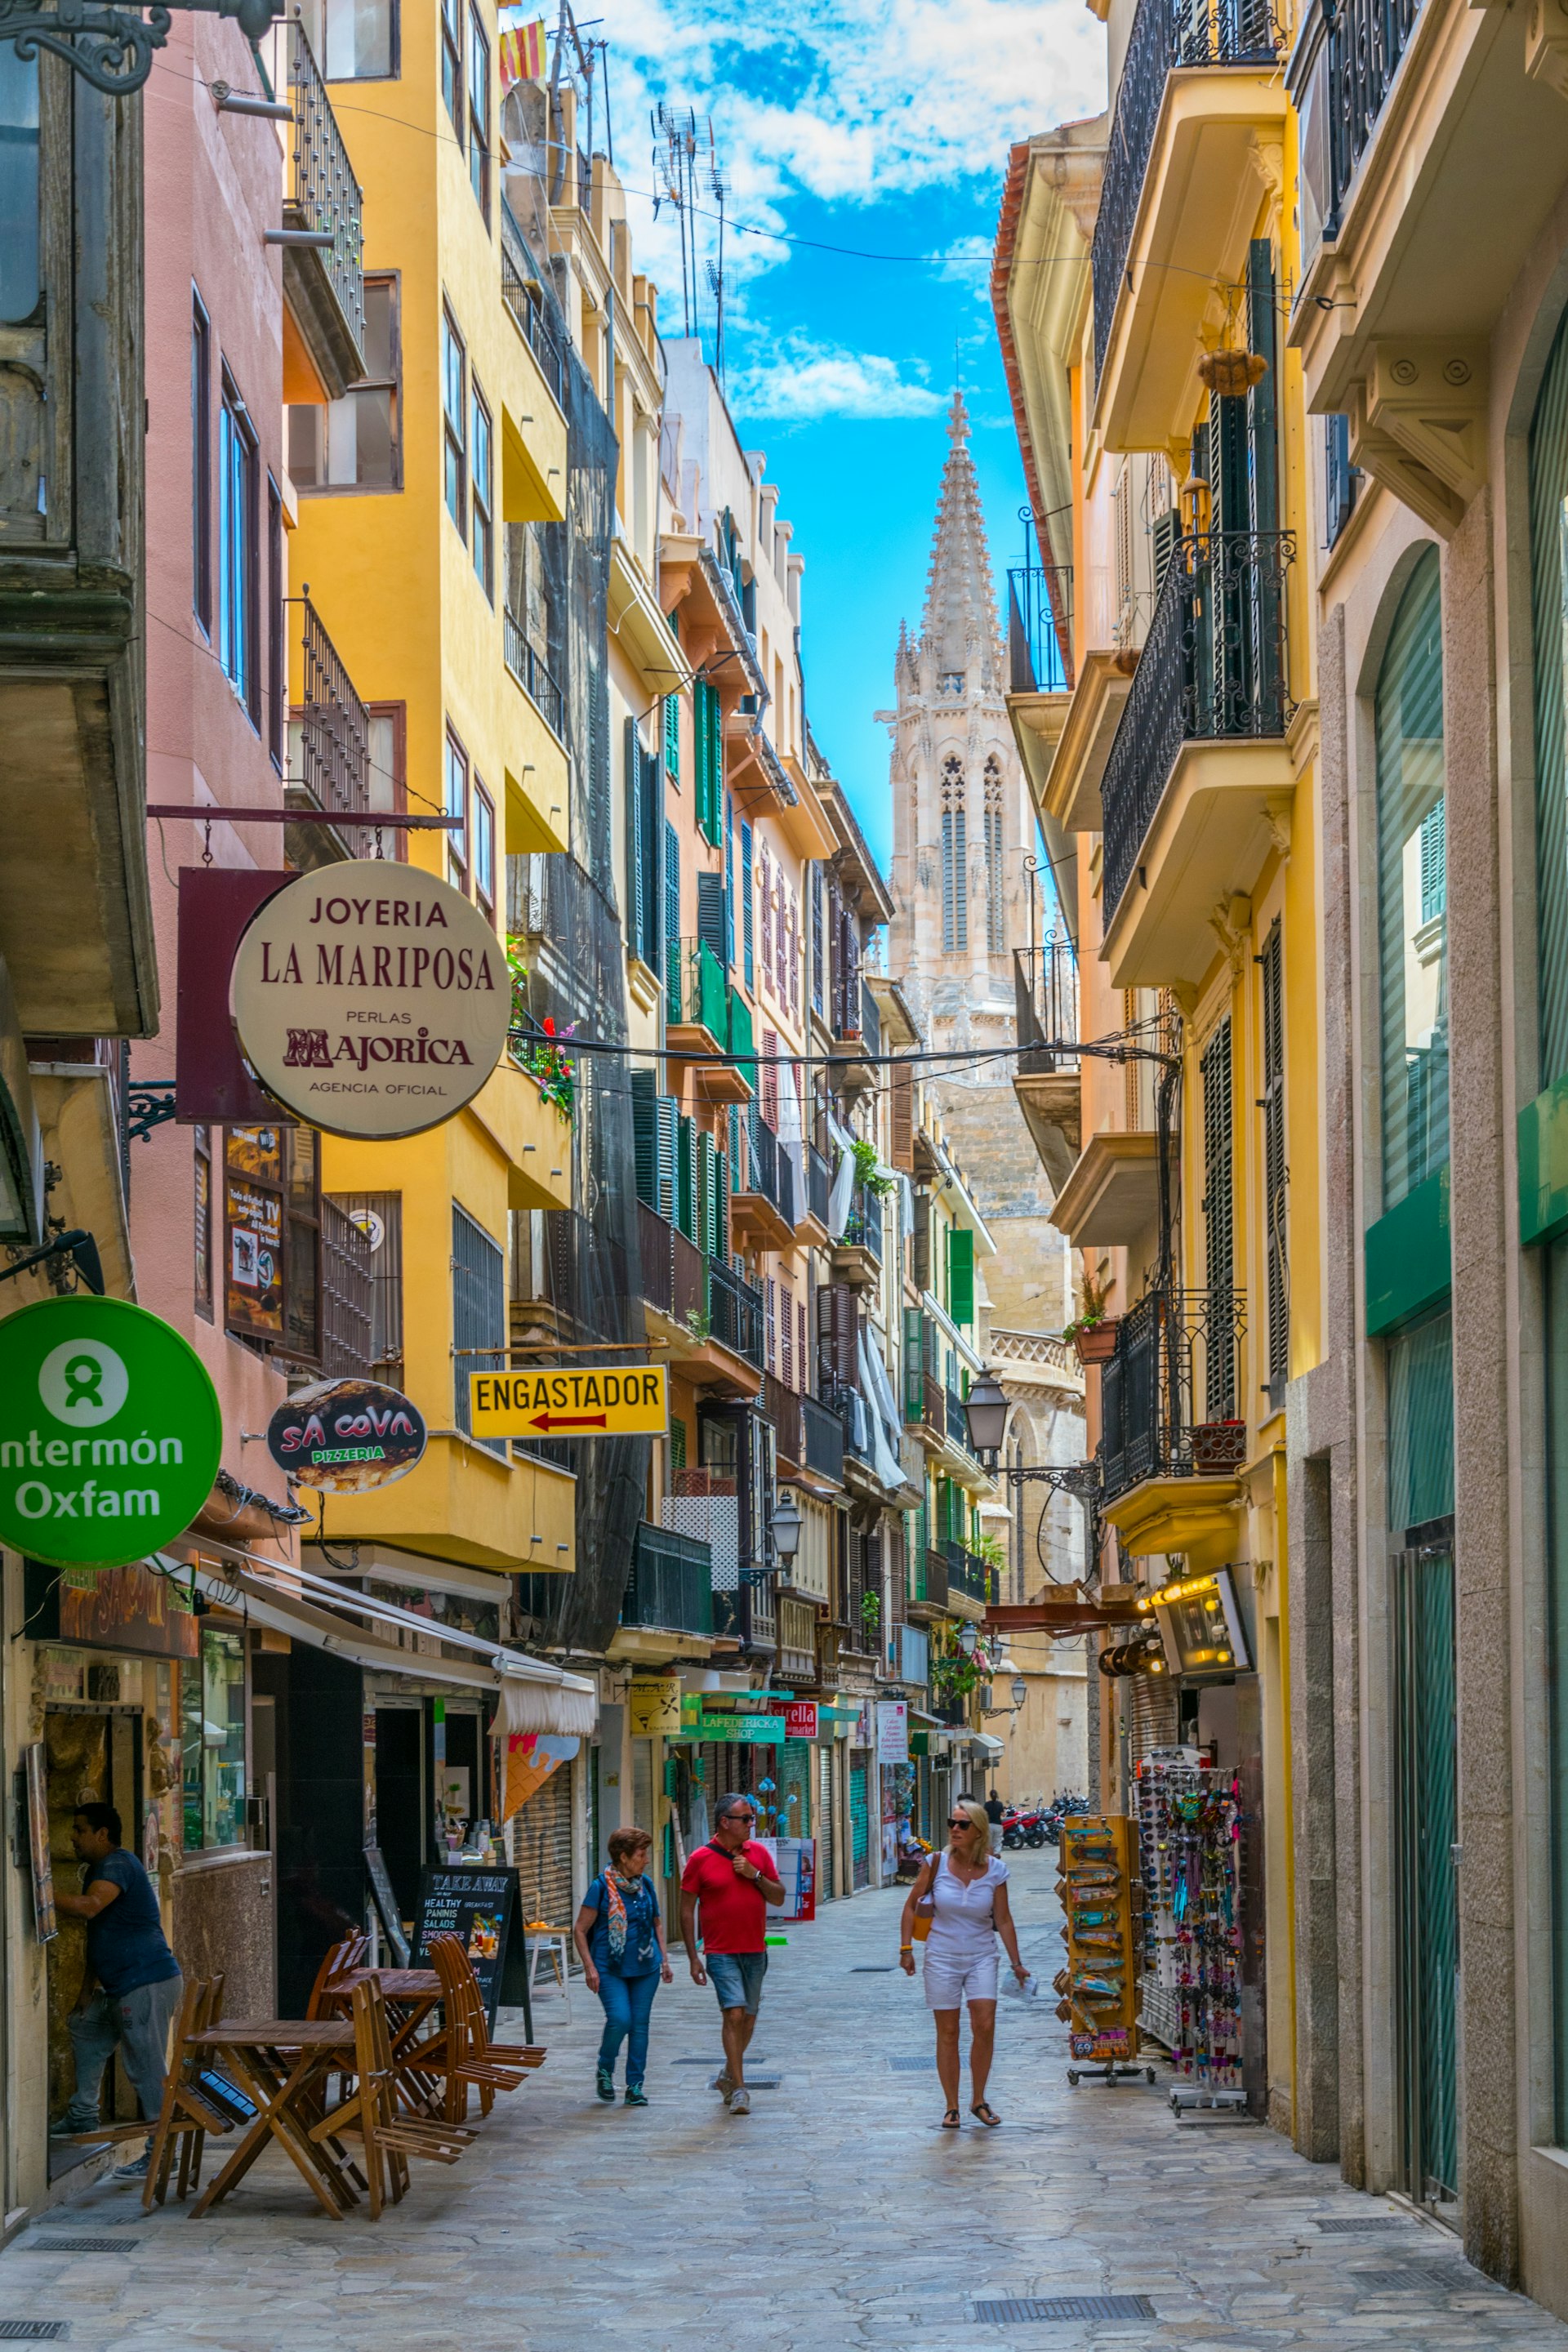 View of a narrow street in the historical center of Palma de Mallorca, Spain